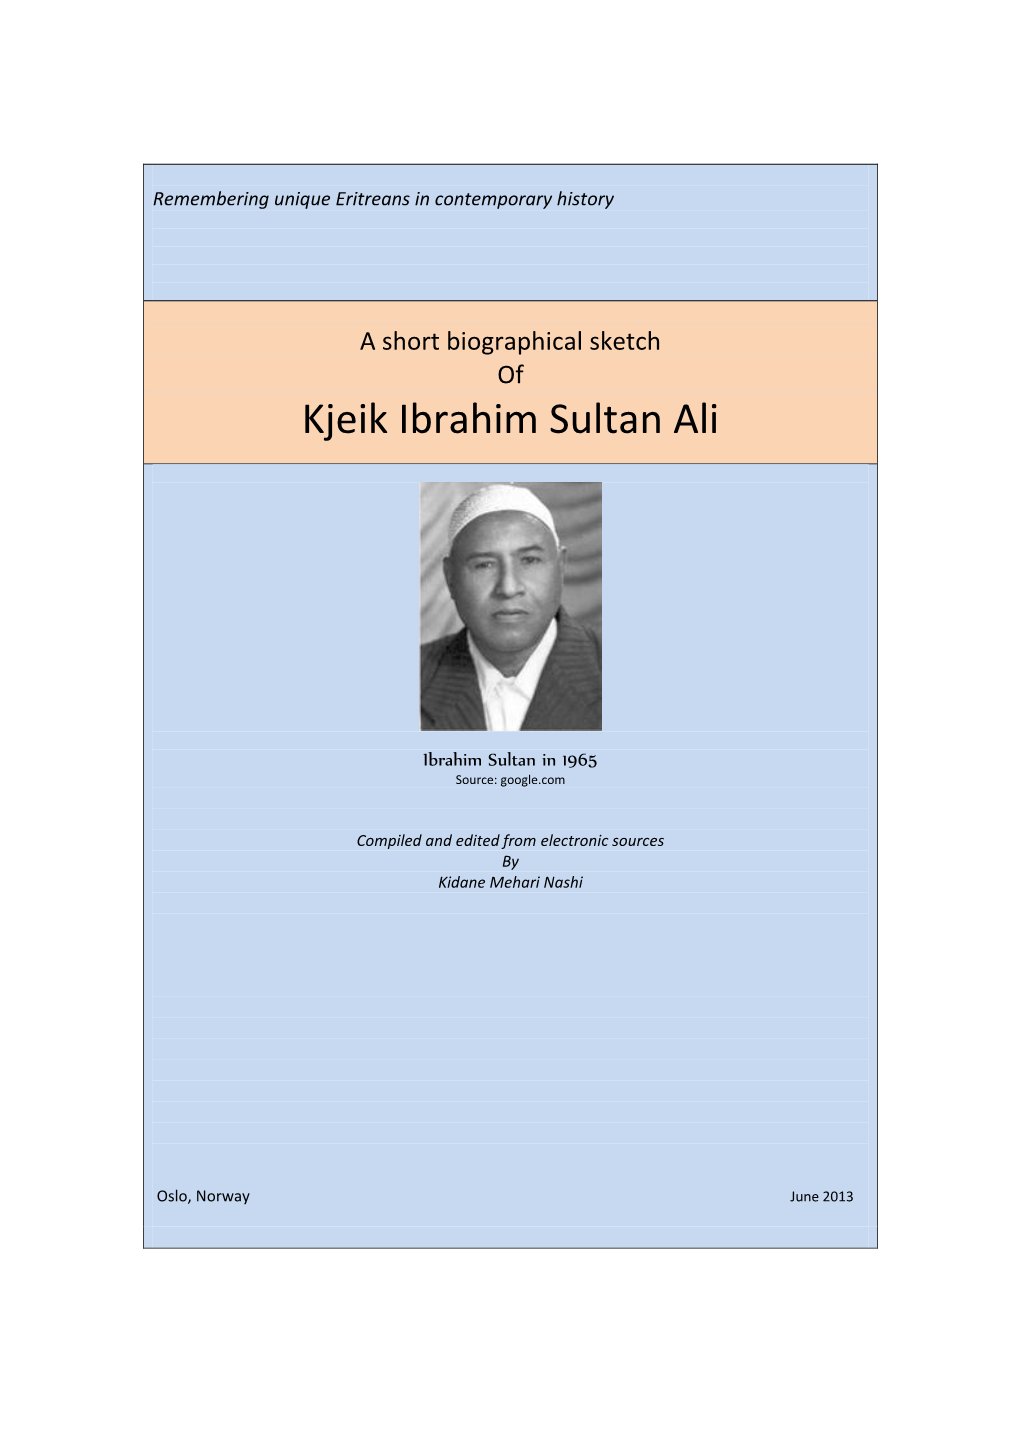 Kjeik Ibrahim Sultan Ali